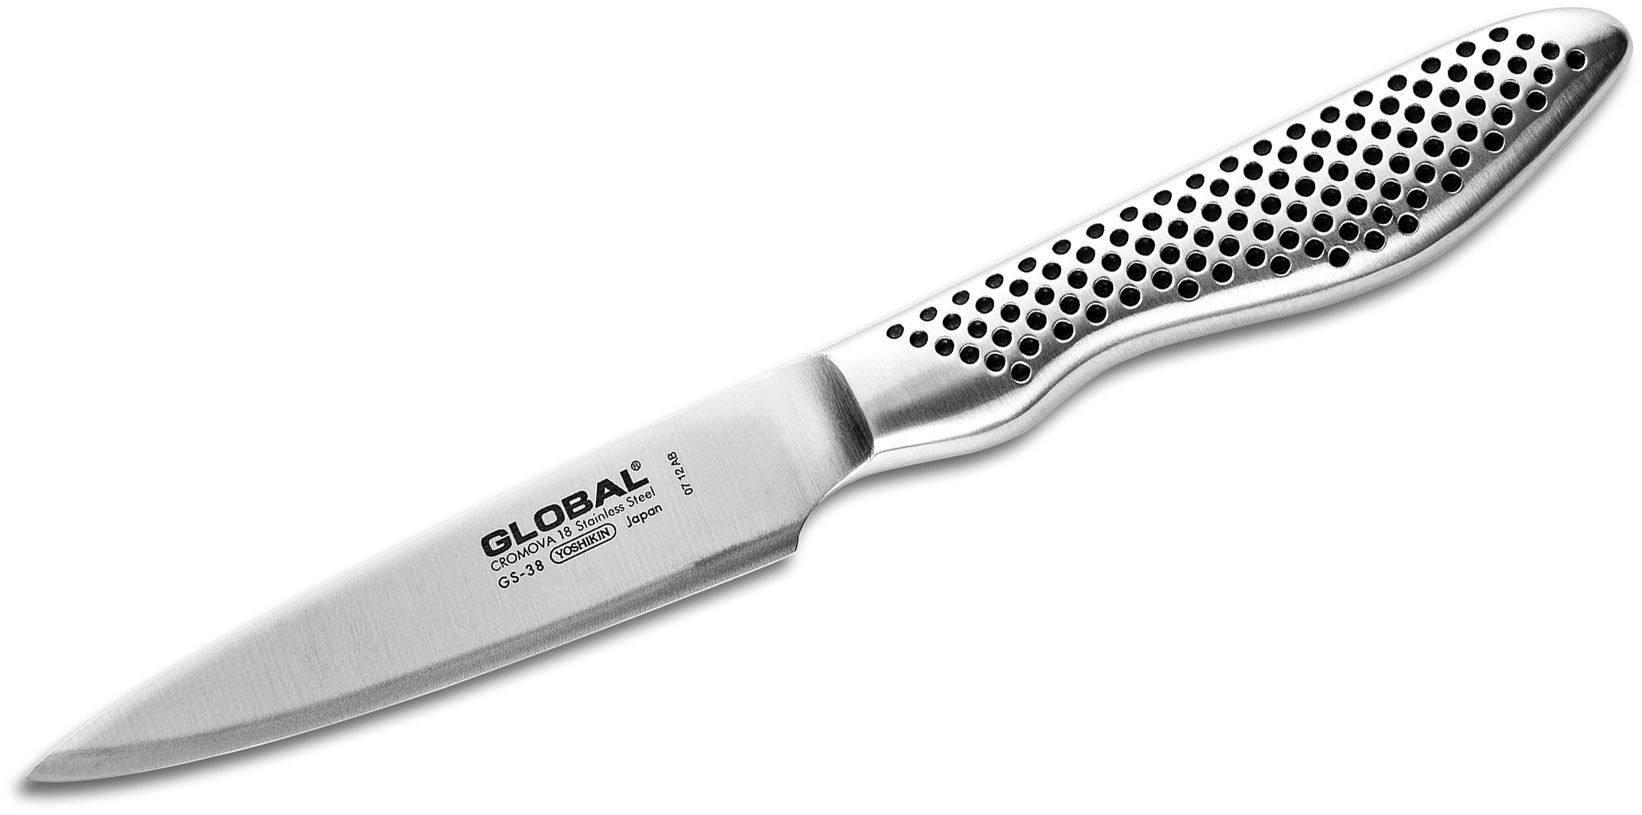 4-Inch Global Paring Knife, Cutlery